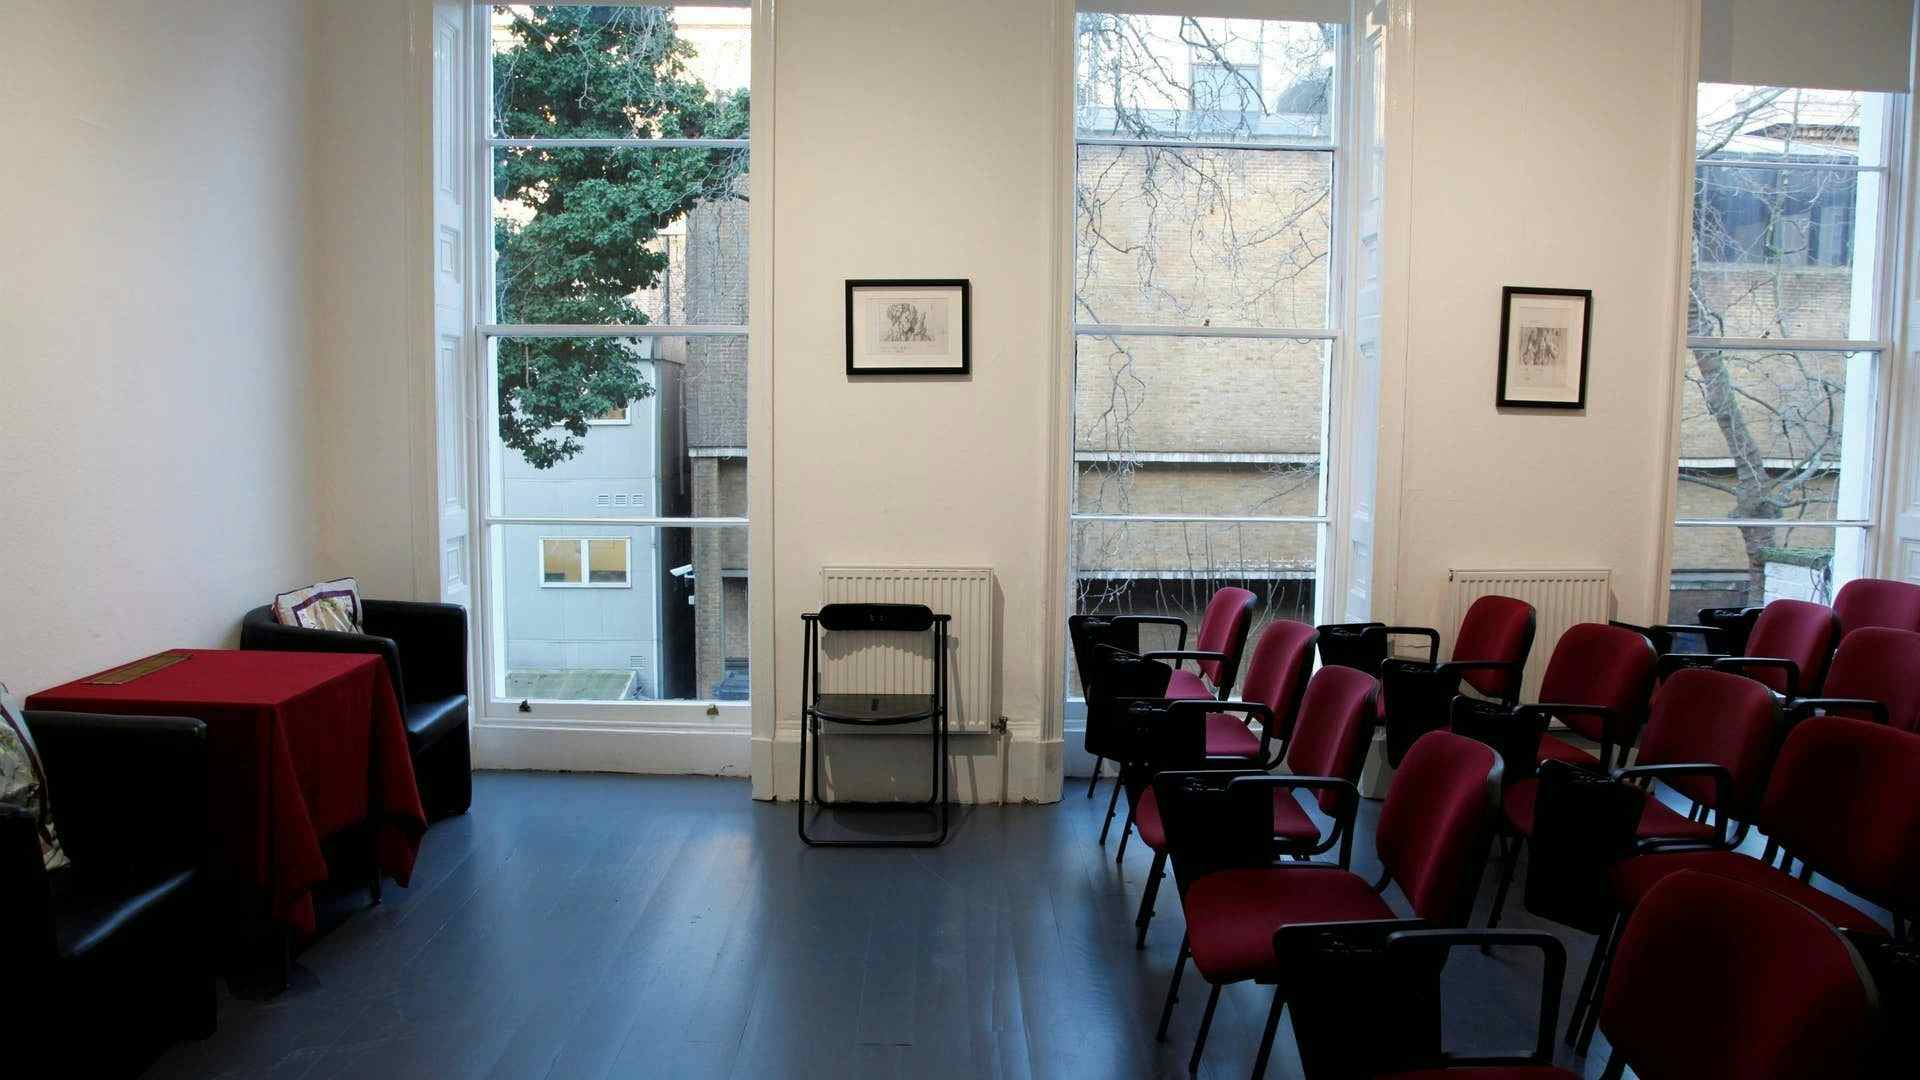 Hepworth Room - First Floor, Bloomsbury Gallery 